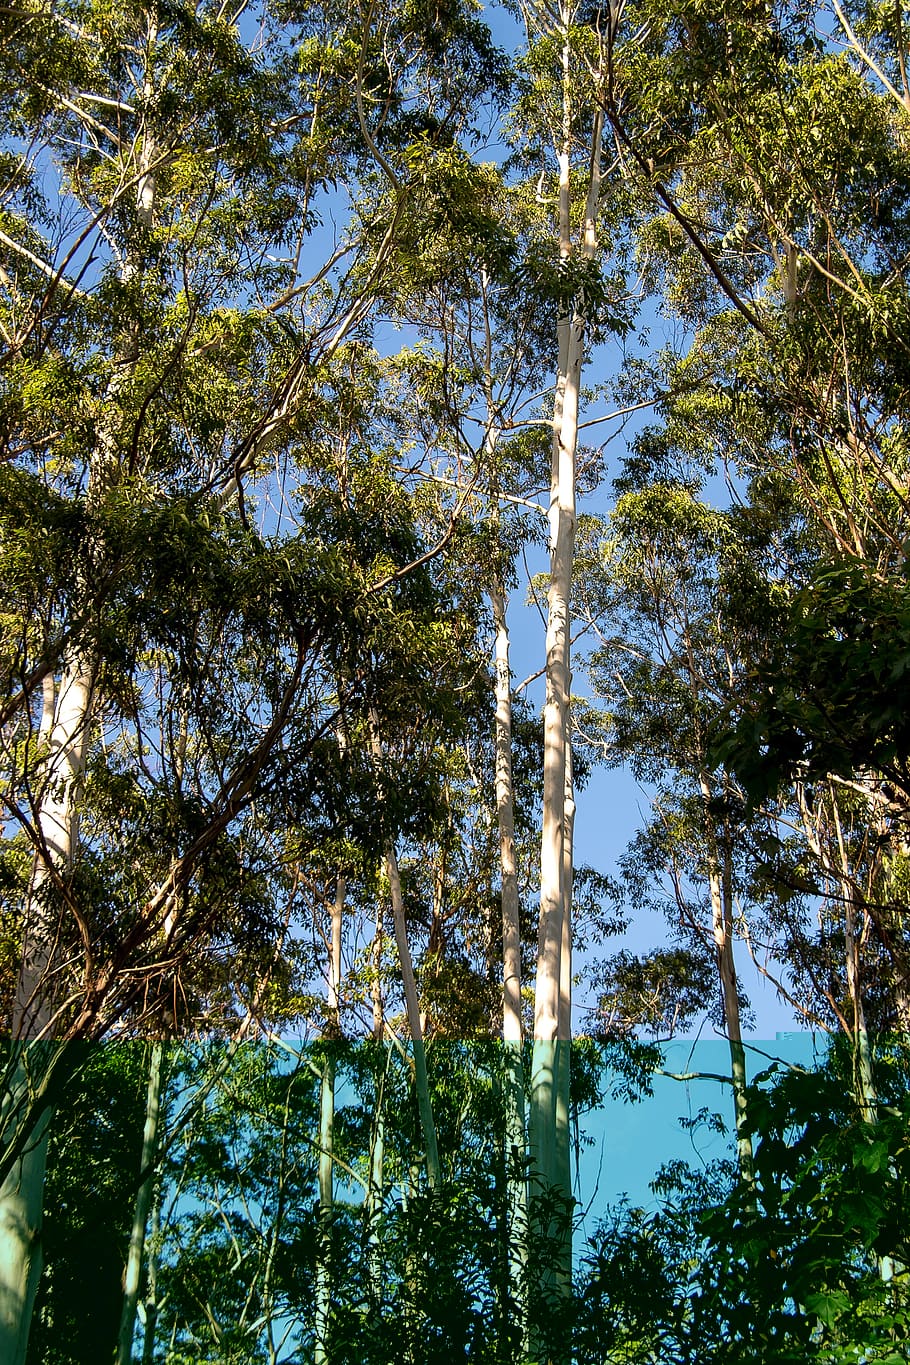 gum trees, eucalyptus, grandis, trees, rainforest, blue sky, native, tall, green, queensland